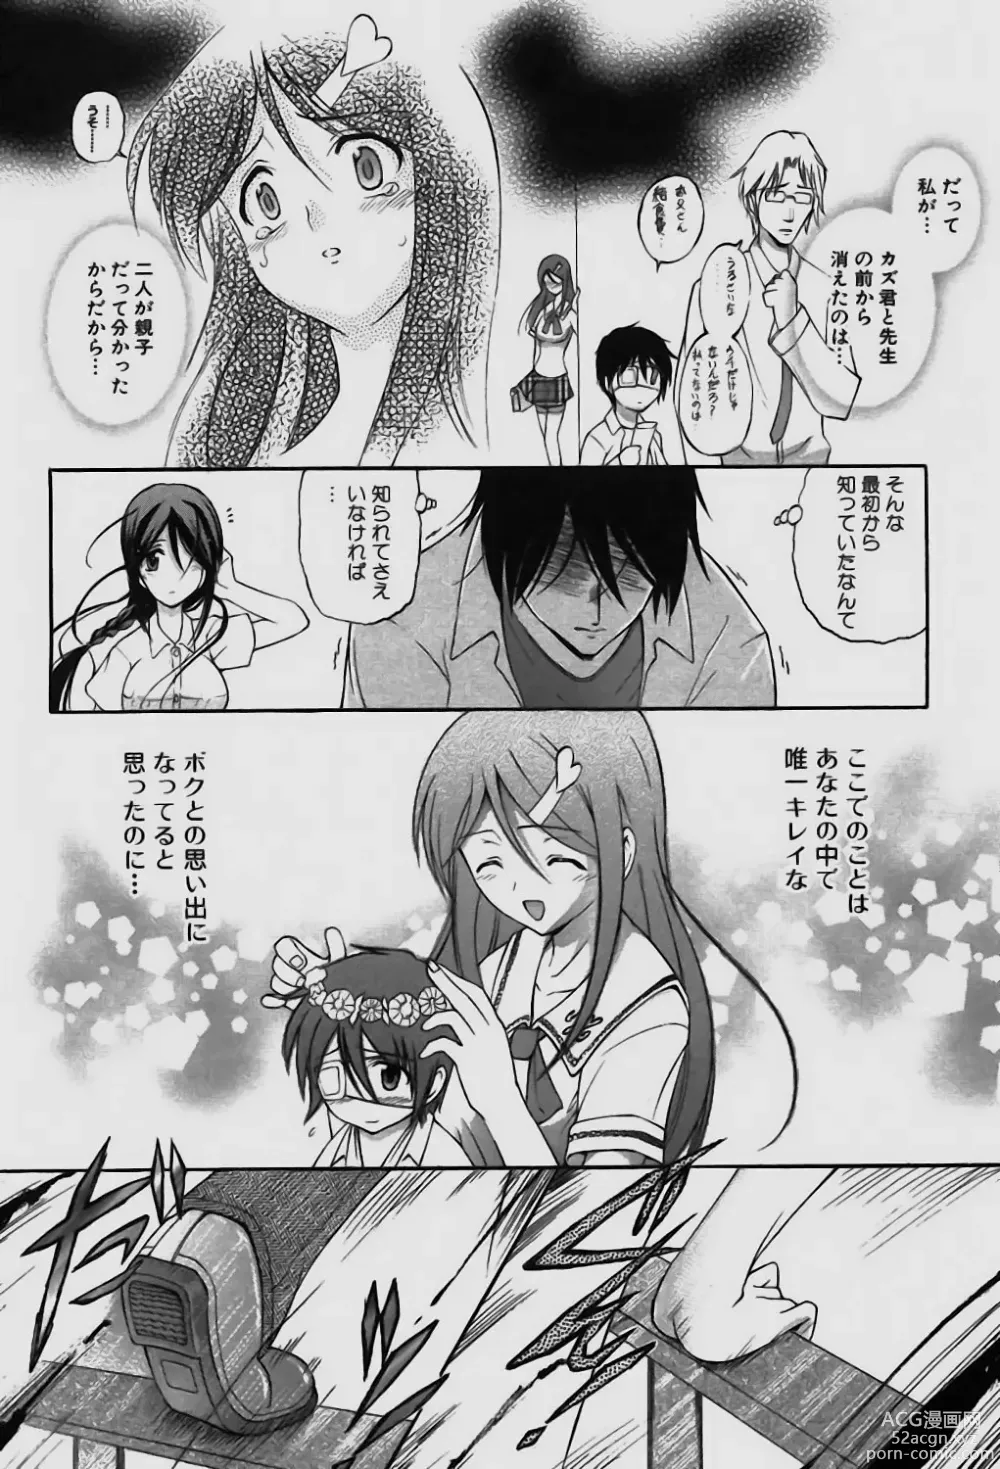 Page 178 of manga Sareruga MaMa